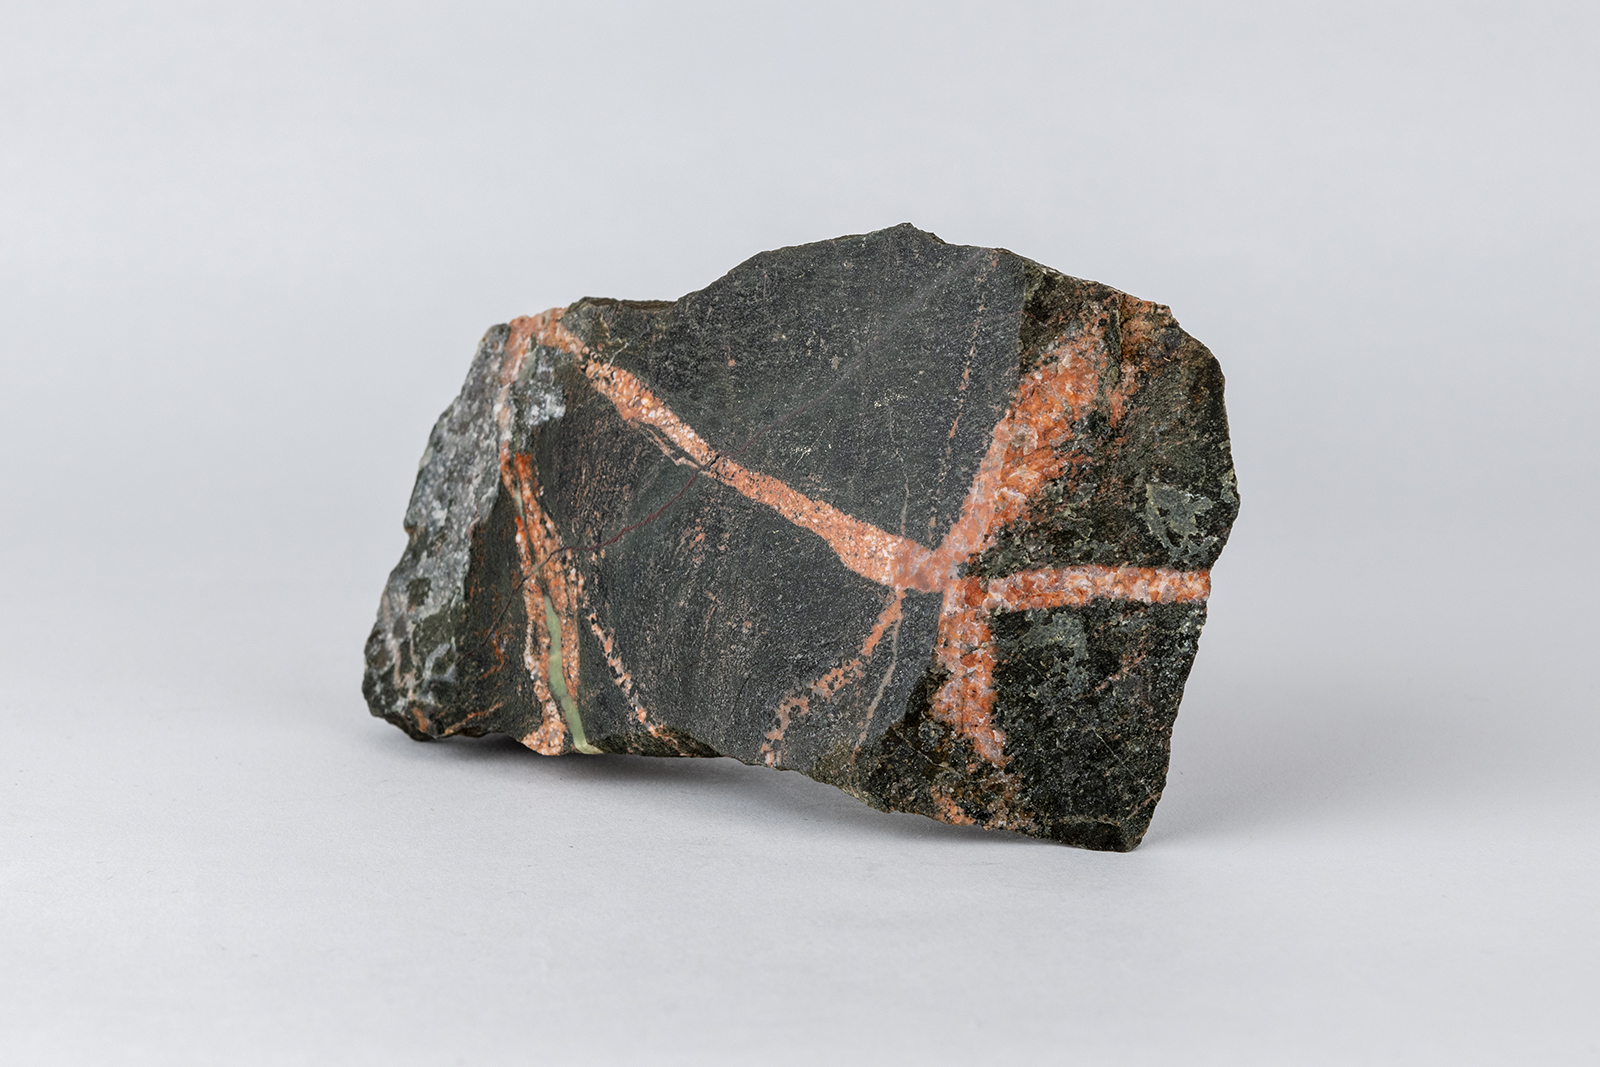 Intersecting veins of pink granite cutting dark metamorphosed sandstone, Glen Tilt (GLAHM:164042)